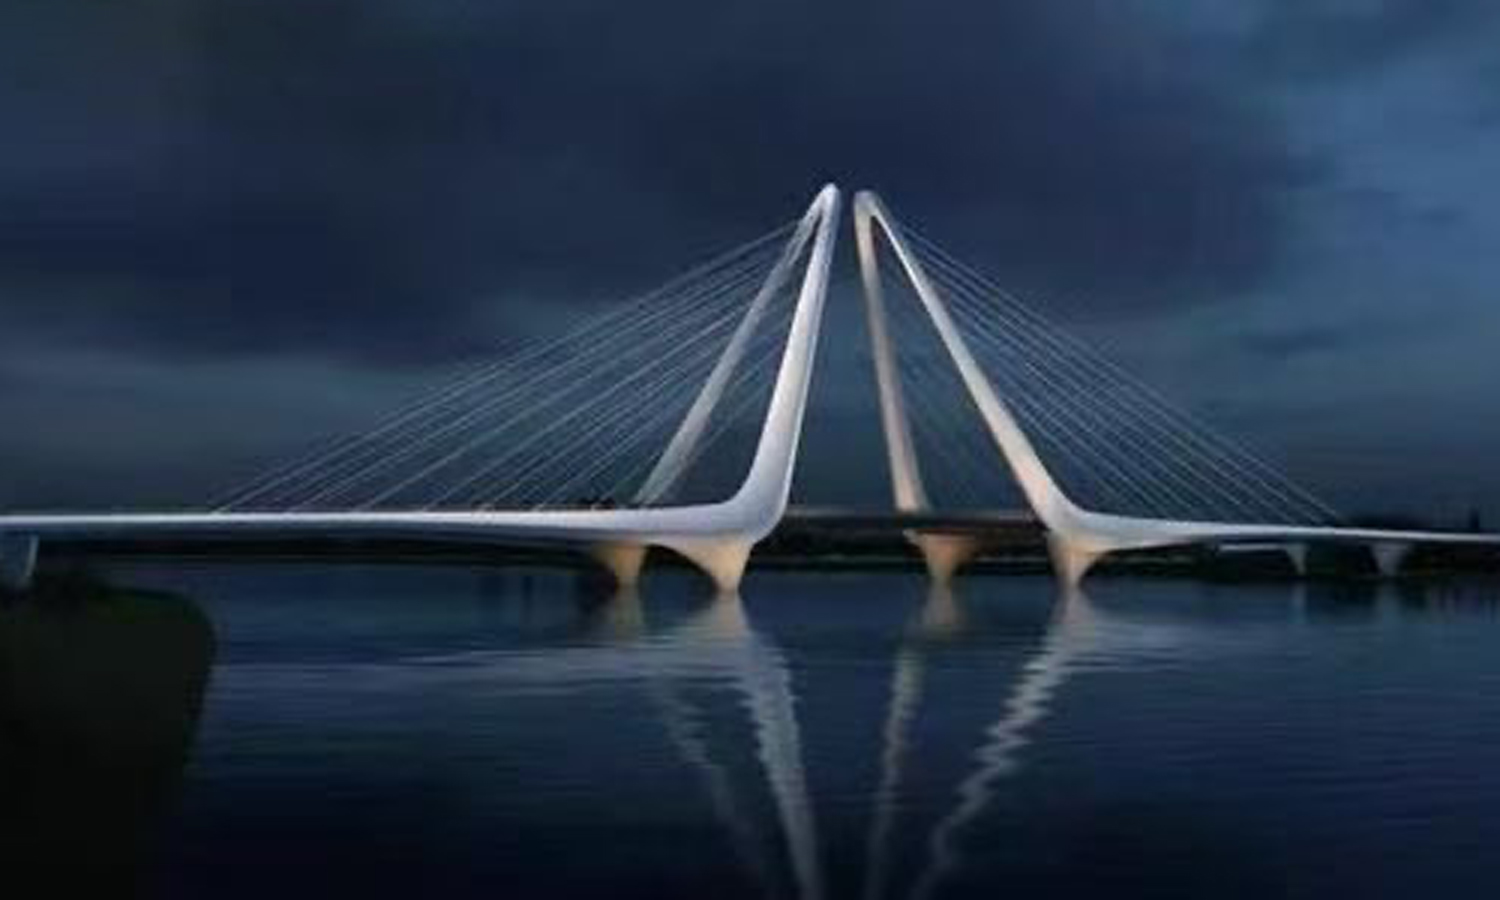 Cable-stayed bridge isometric blueprints Vector Image